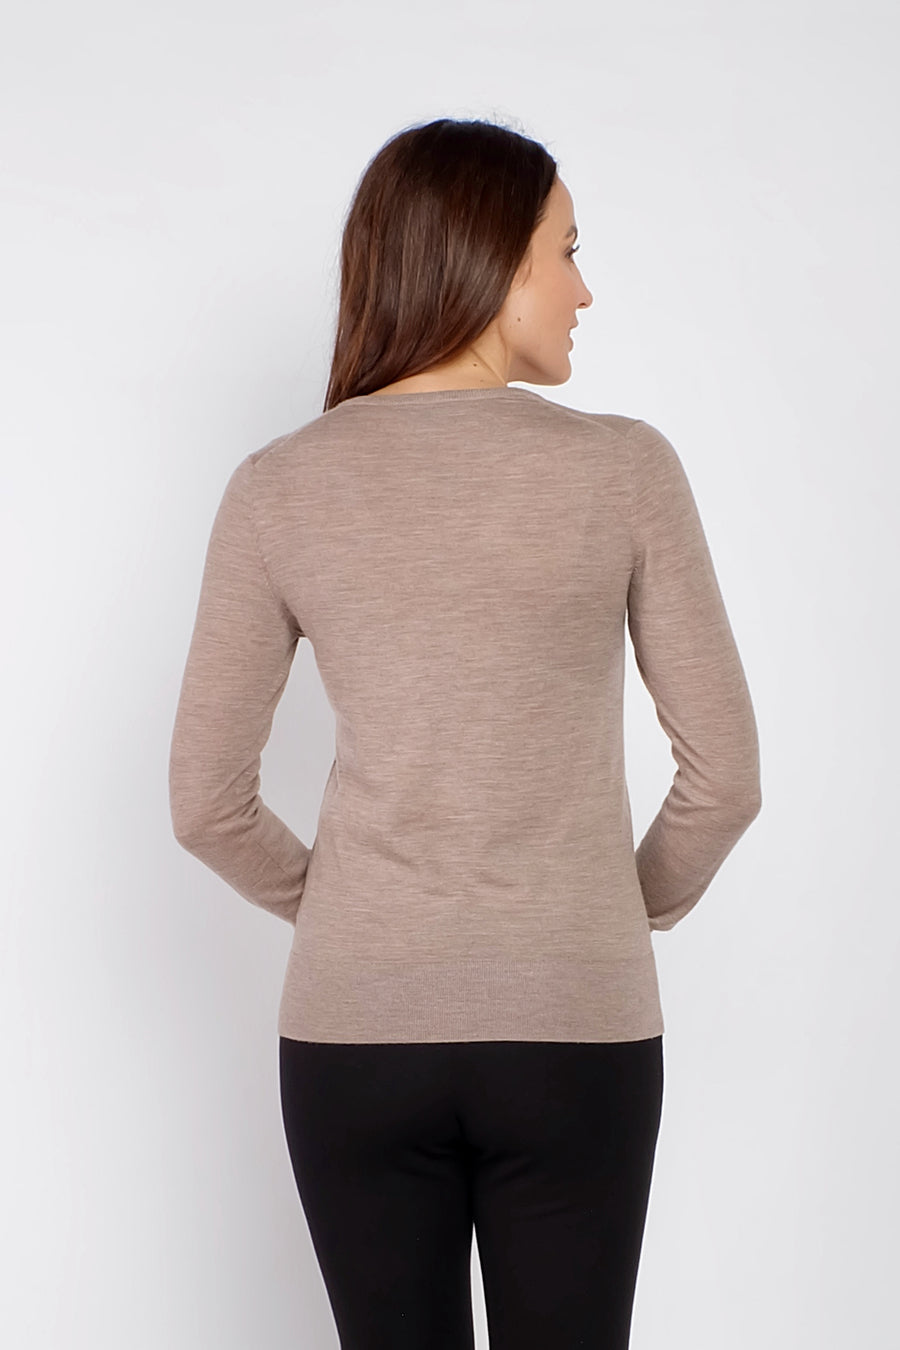 women's long sleeve cashmere sweater